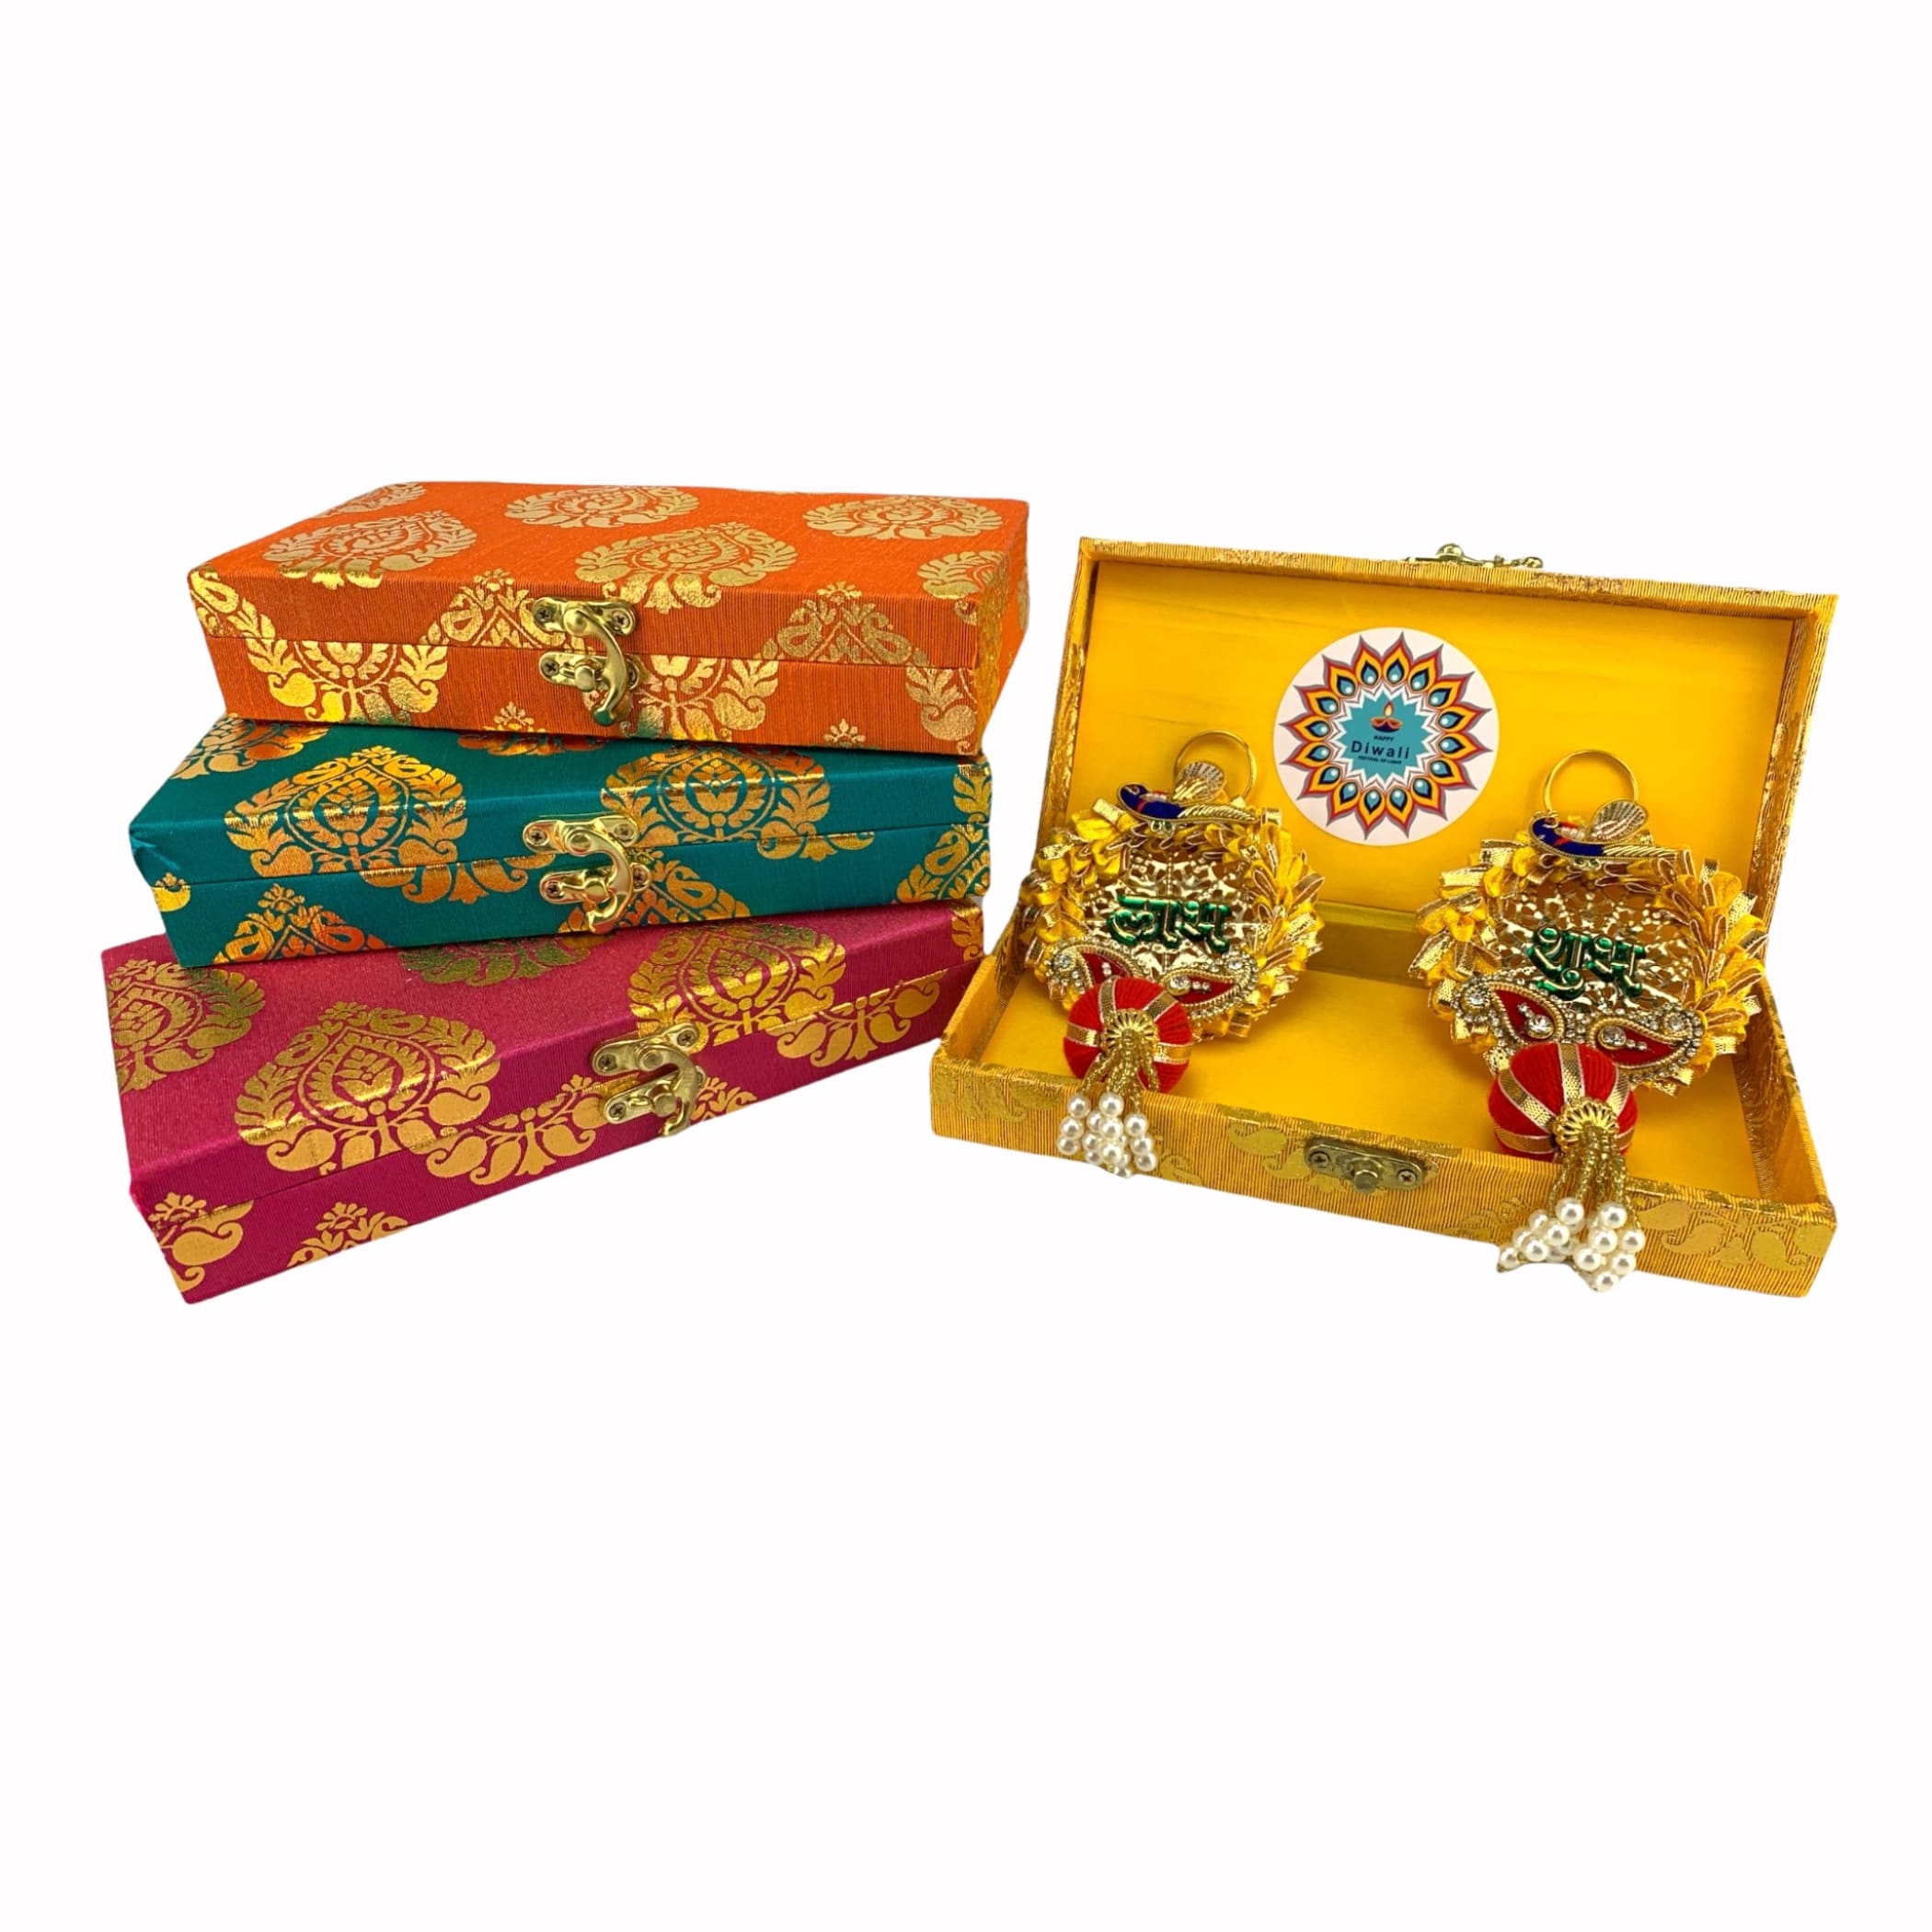 Personalize diwali gifts boxes navratri hamper basket shubh